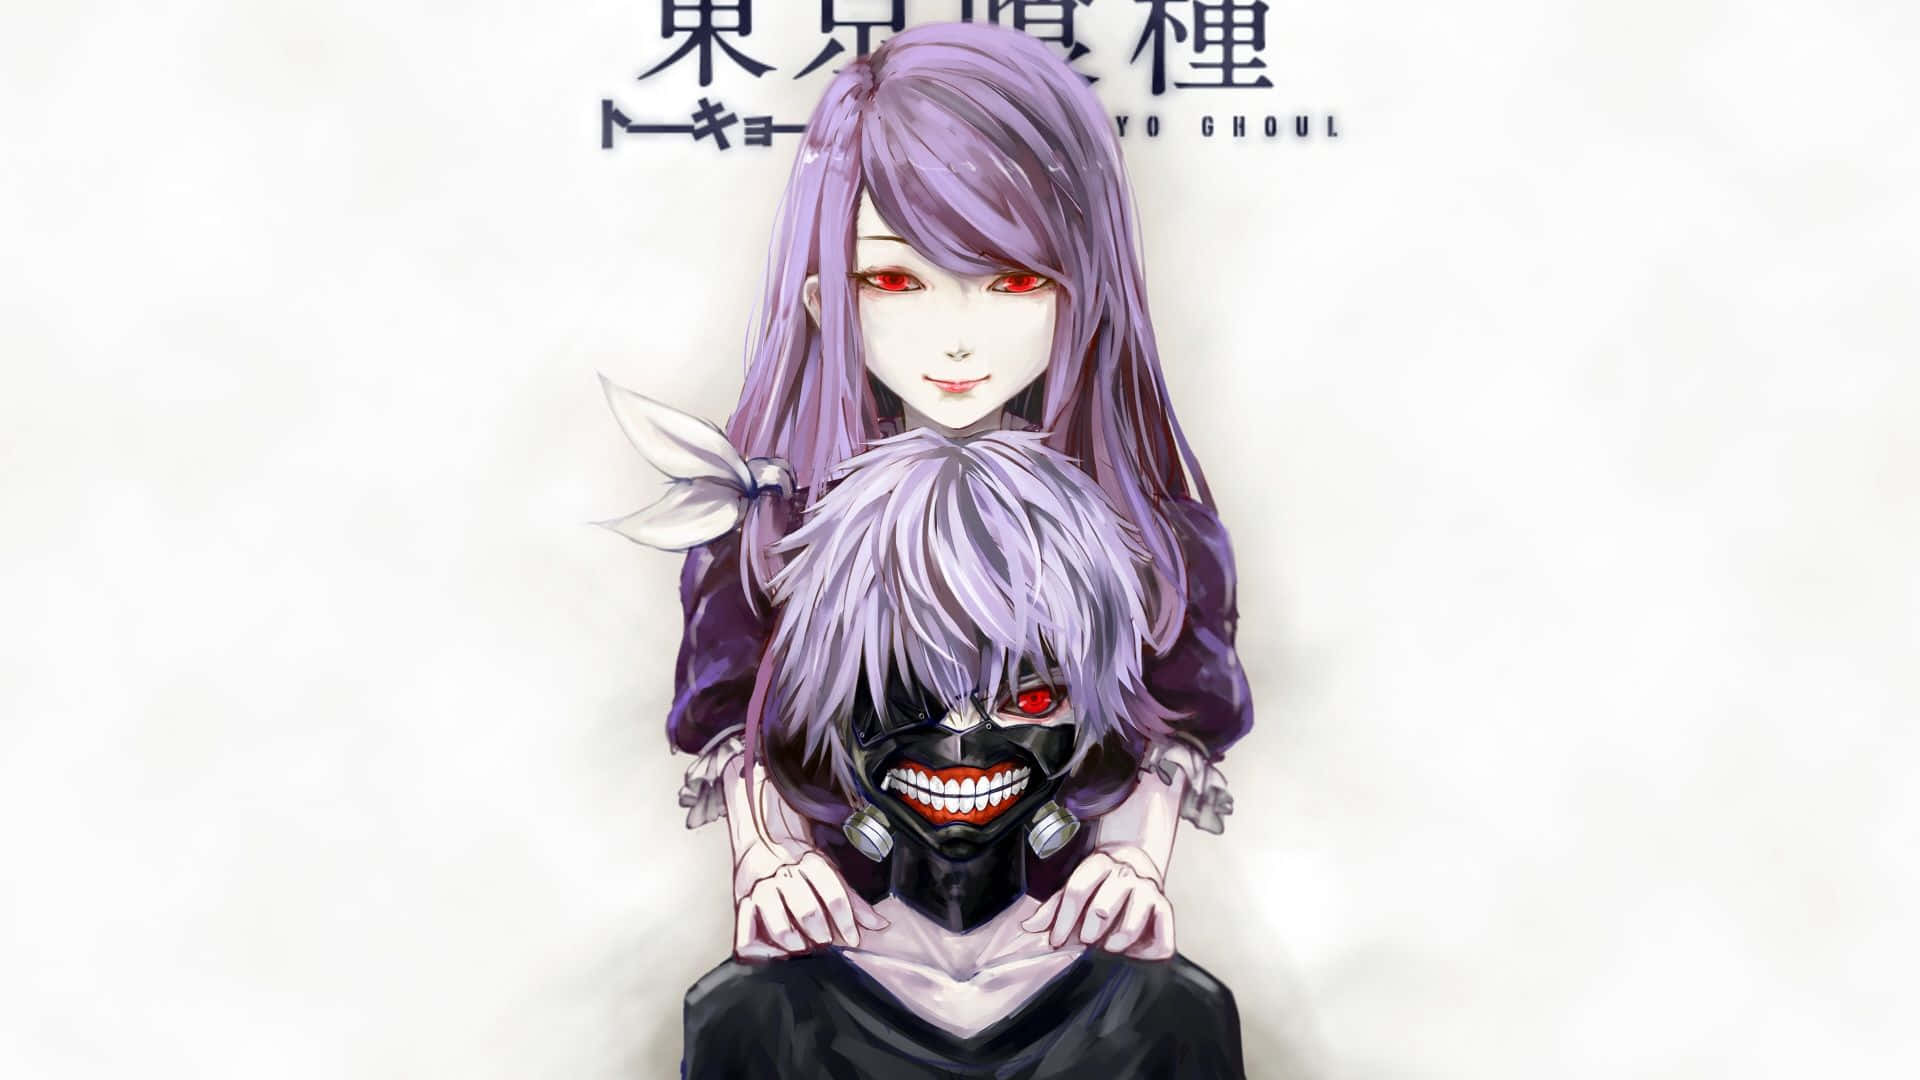 Kanekitriste, Da Anime Tokyo Ghoul, In Forma E Rize. Sfondo